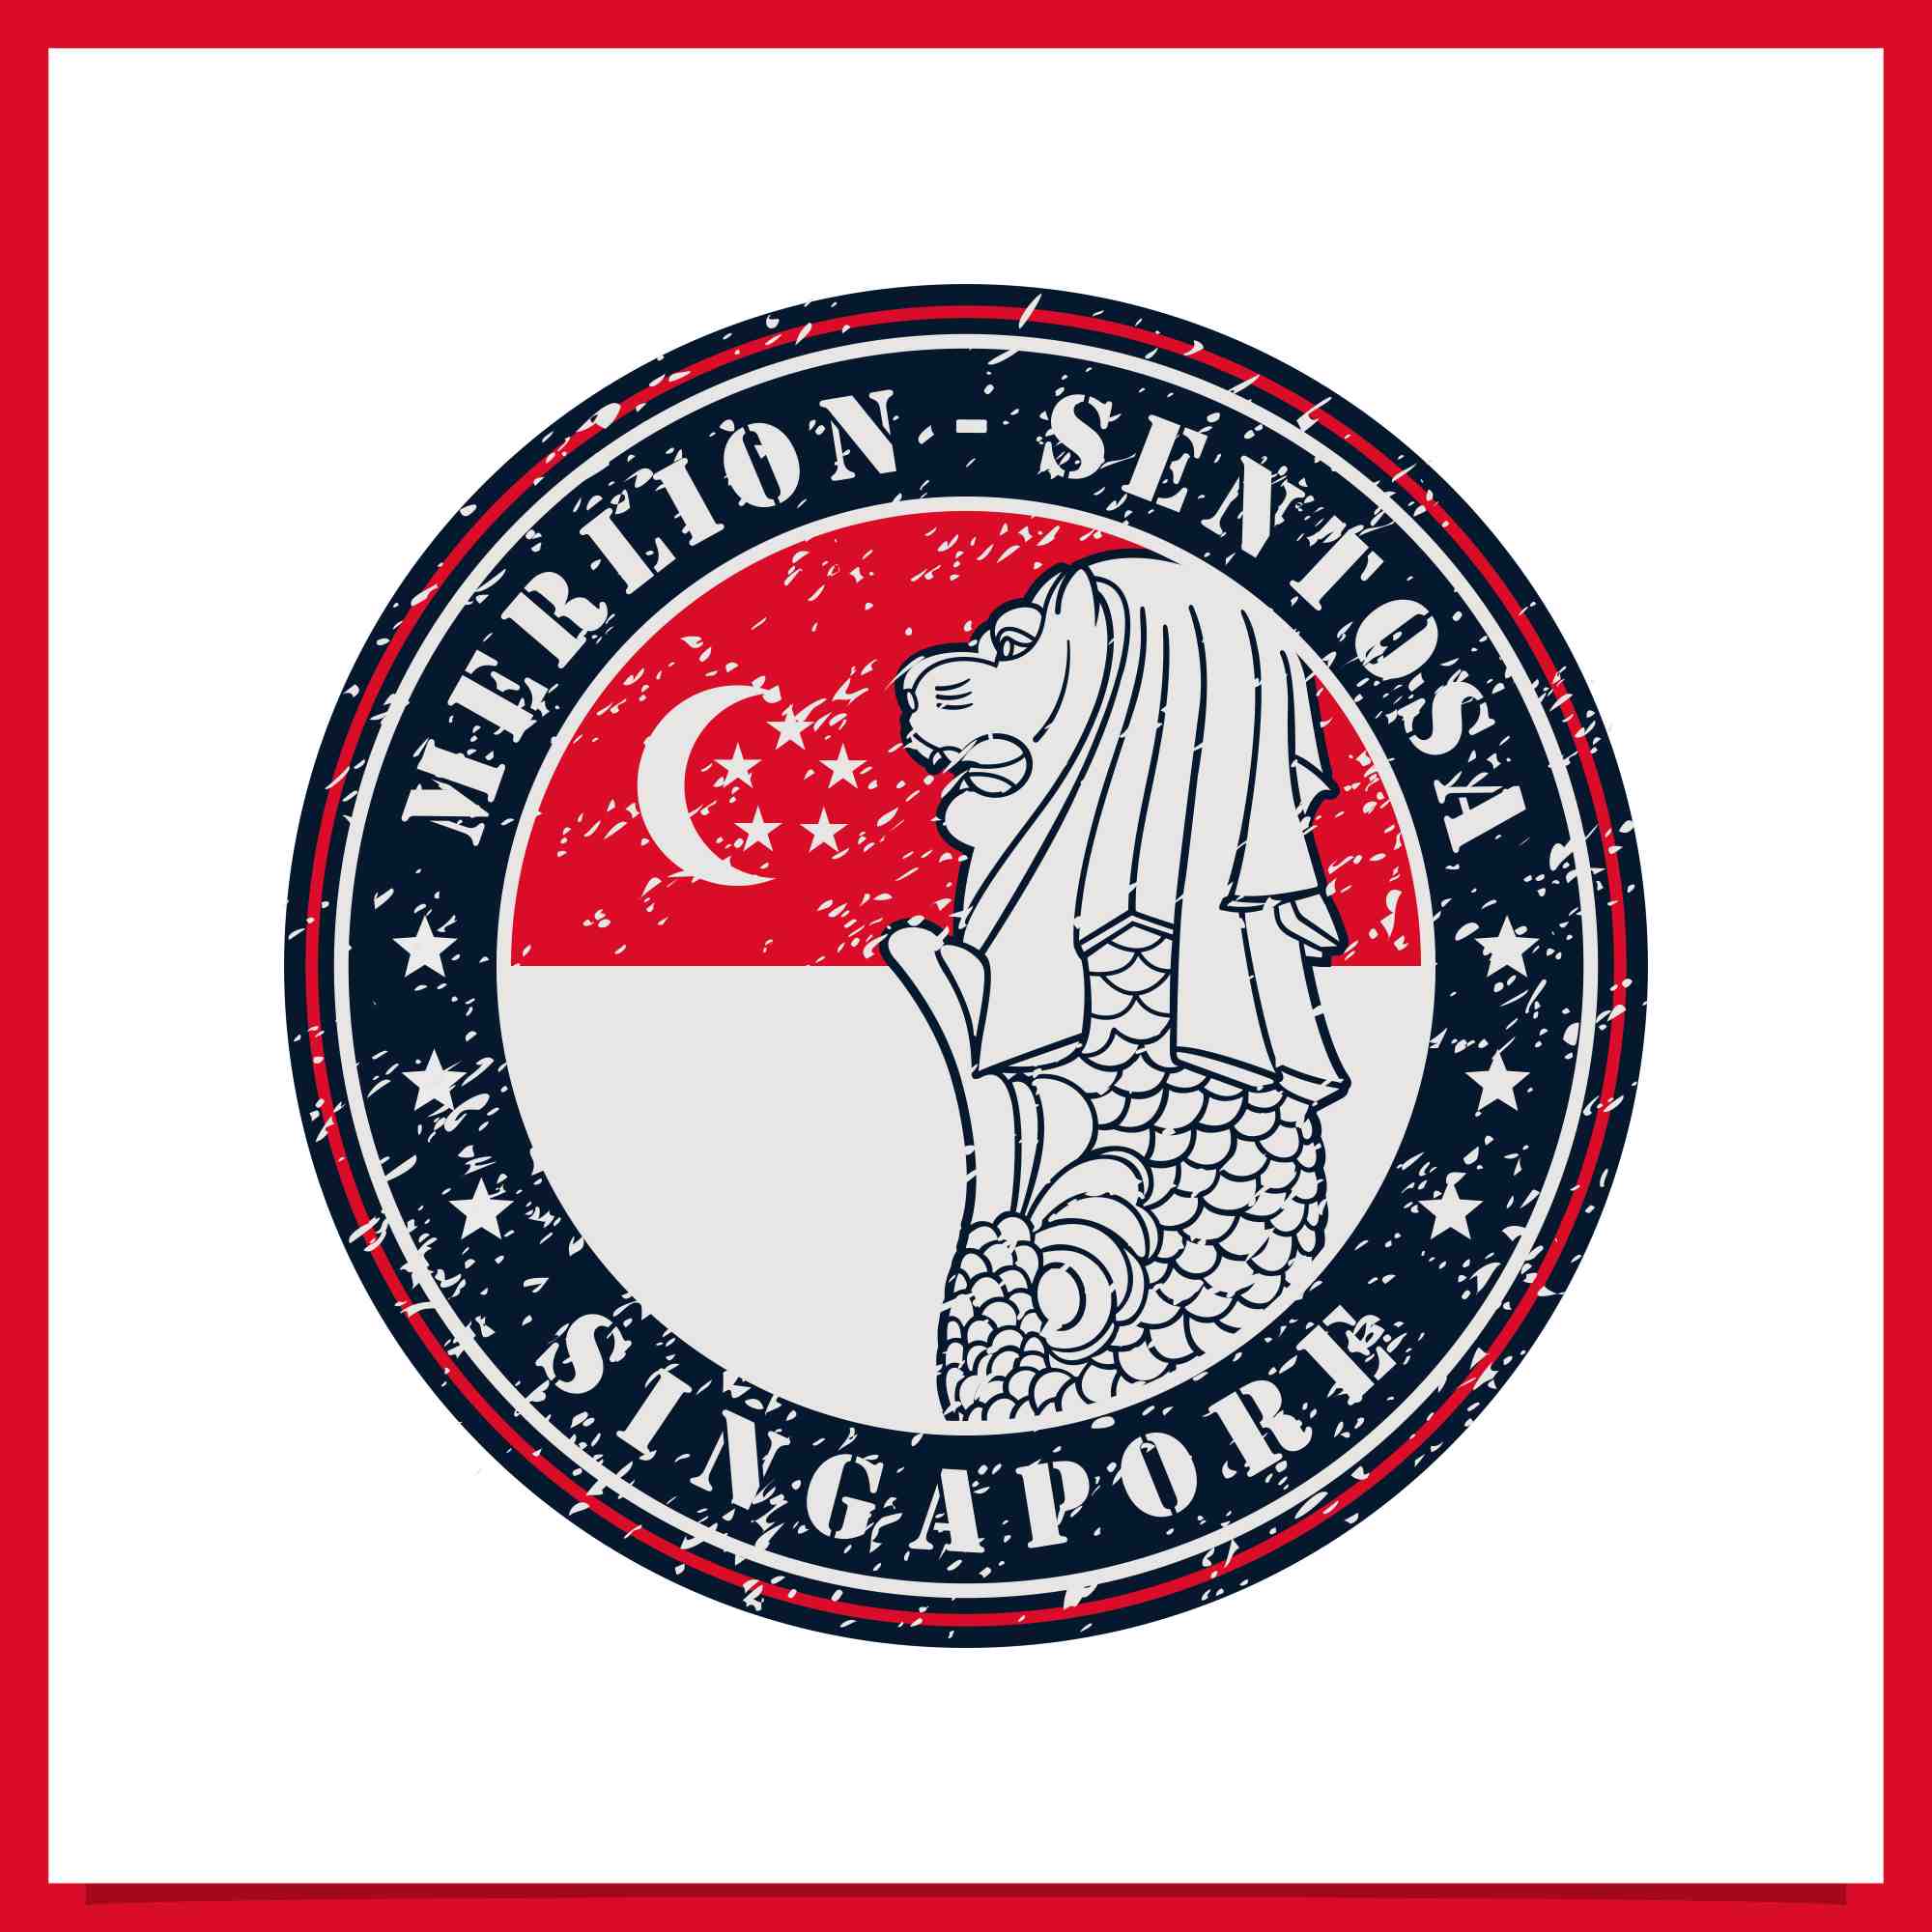 Merlion sentosa singapore logo design collection - $4 preview image.